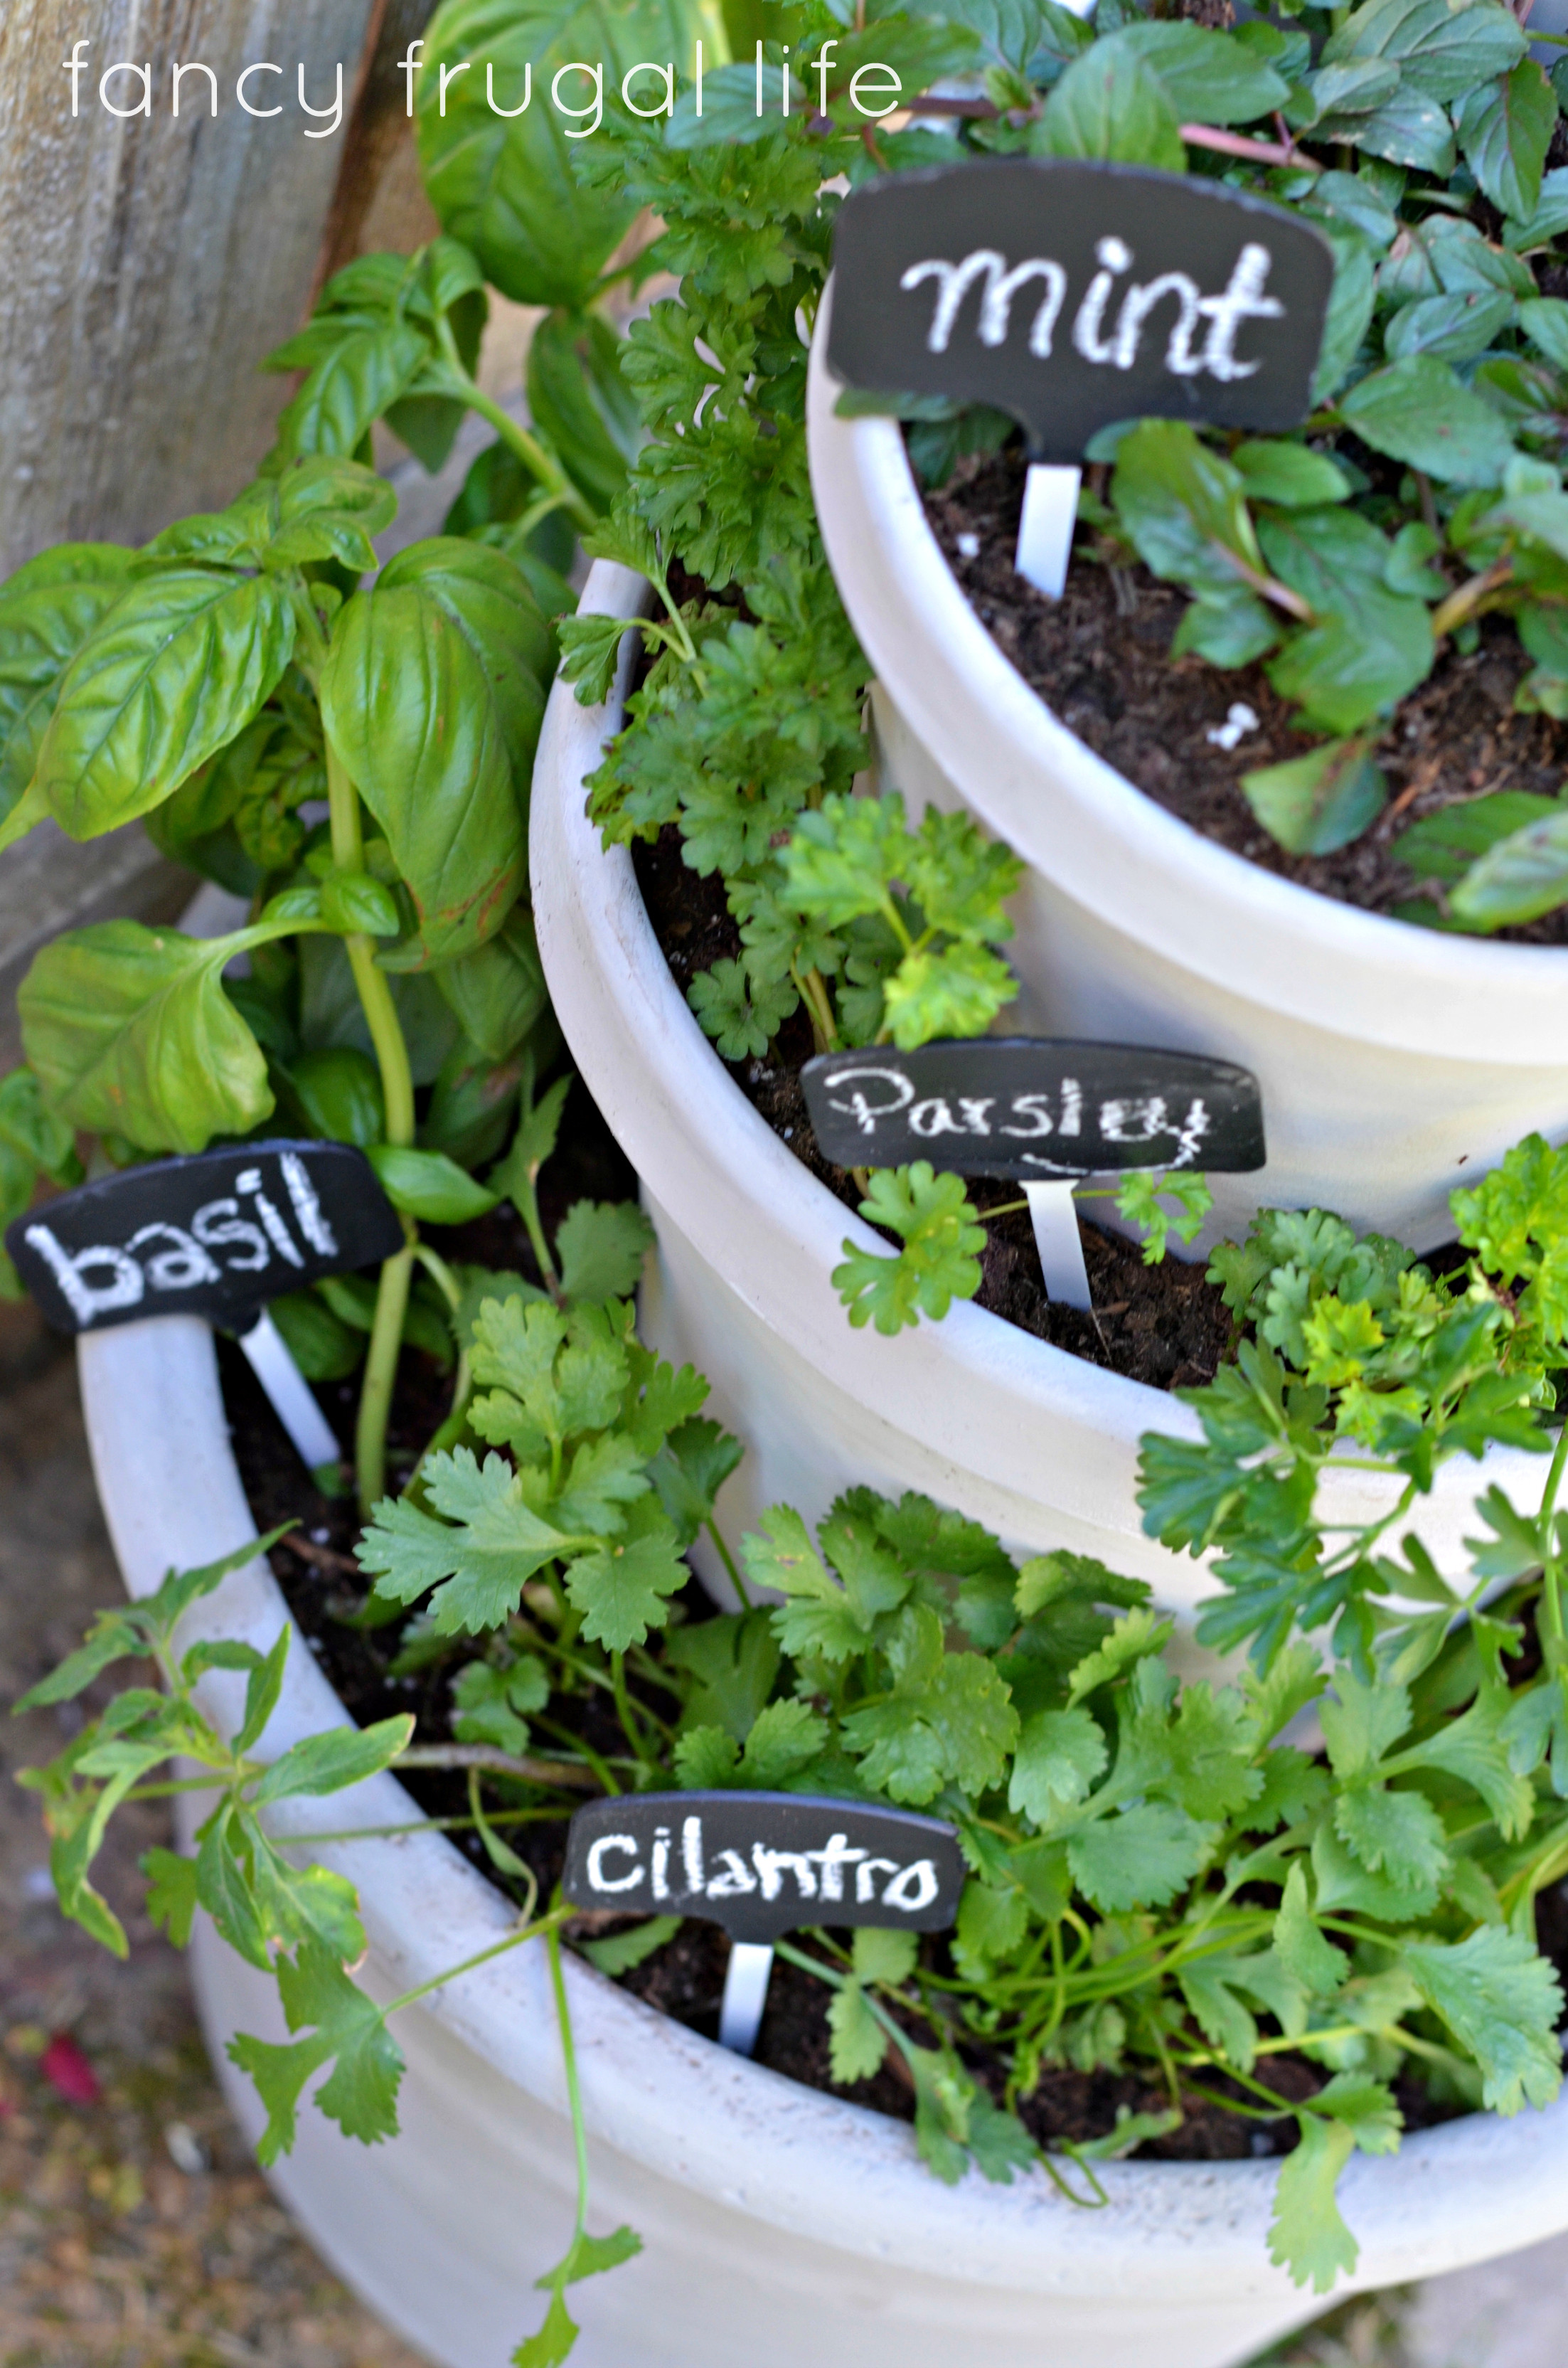 Best ideas about DIY Outdoor Herb Garden
. Save or Pin DIY Stacked Herb Garden Now.